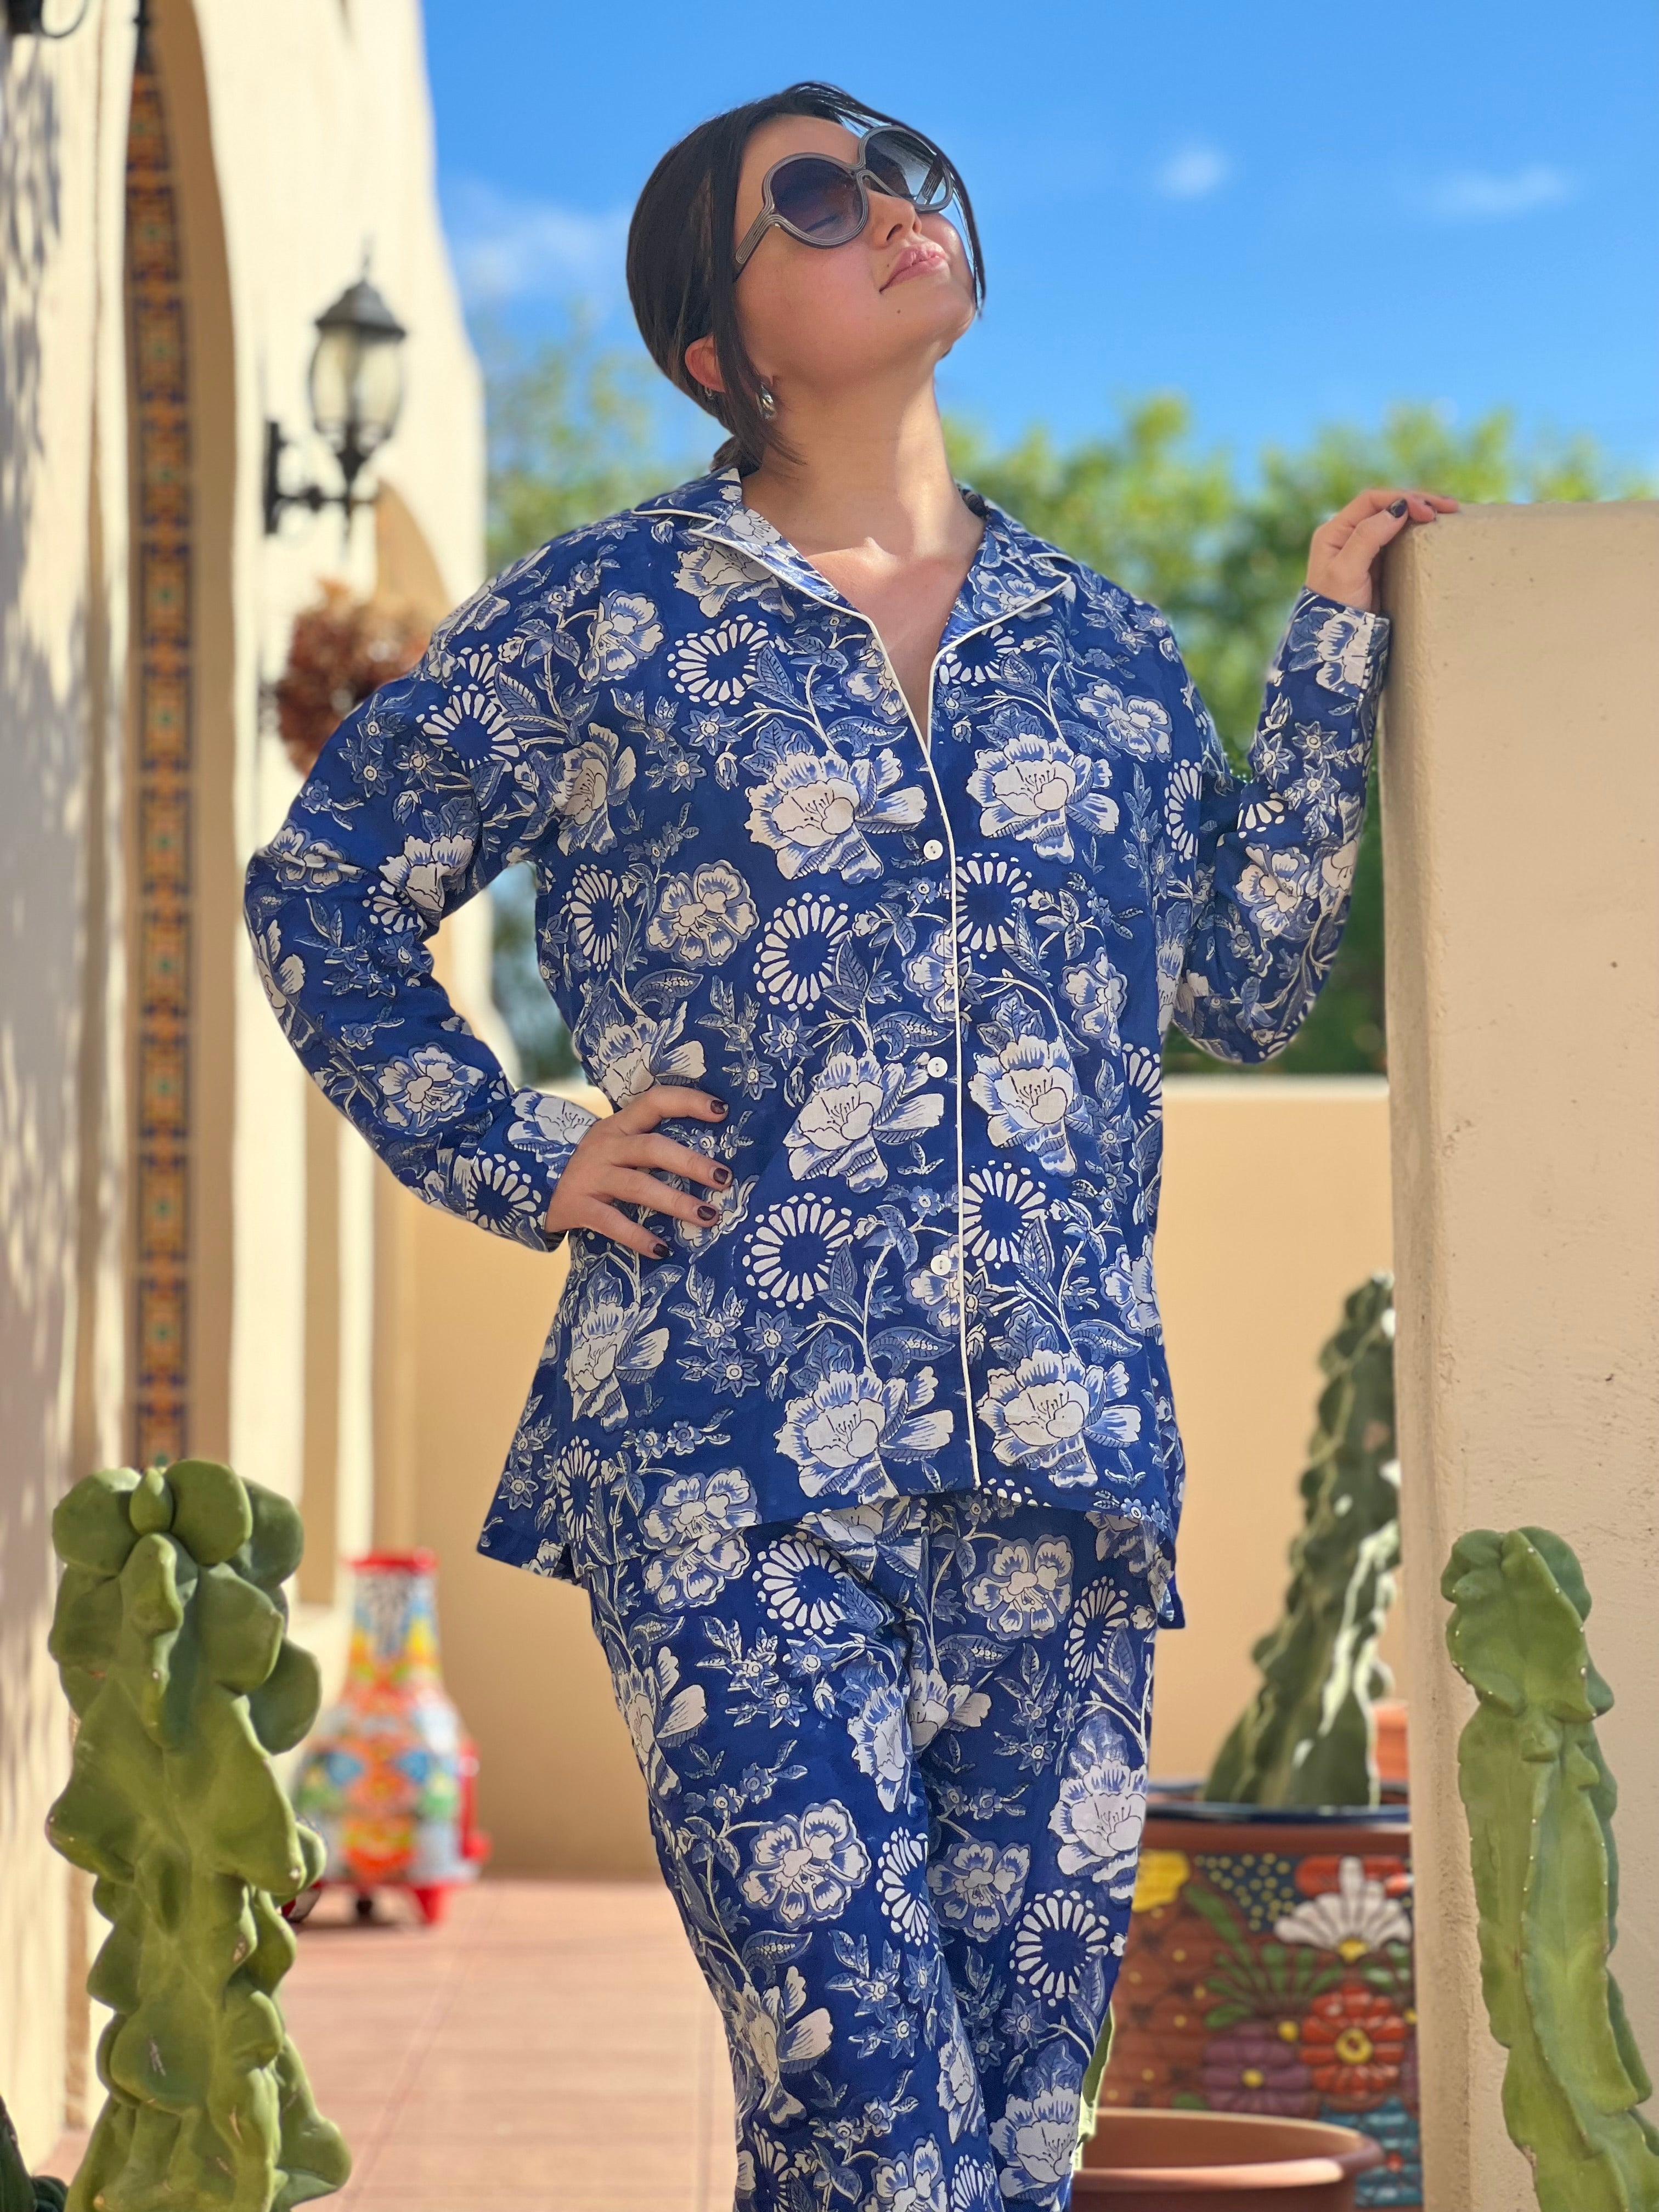 Delft Dream Pajama Long Sleeve